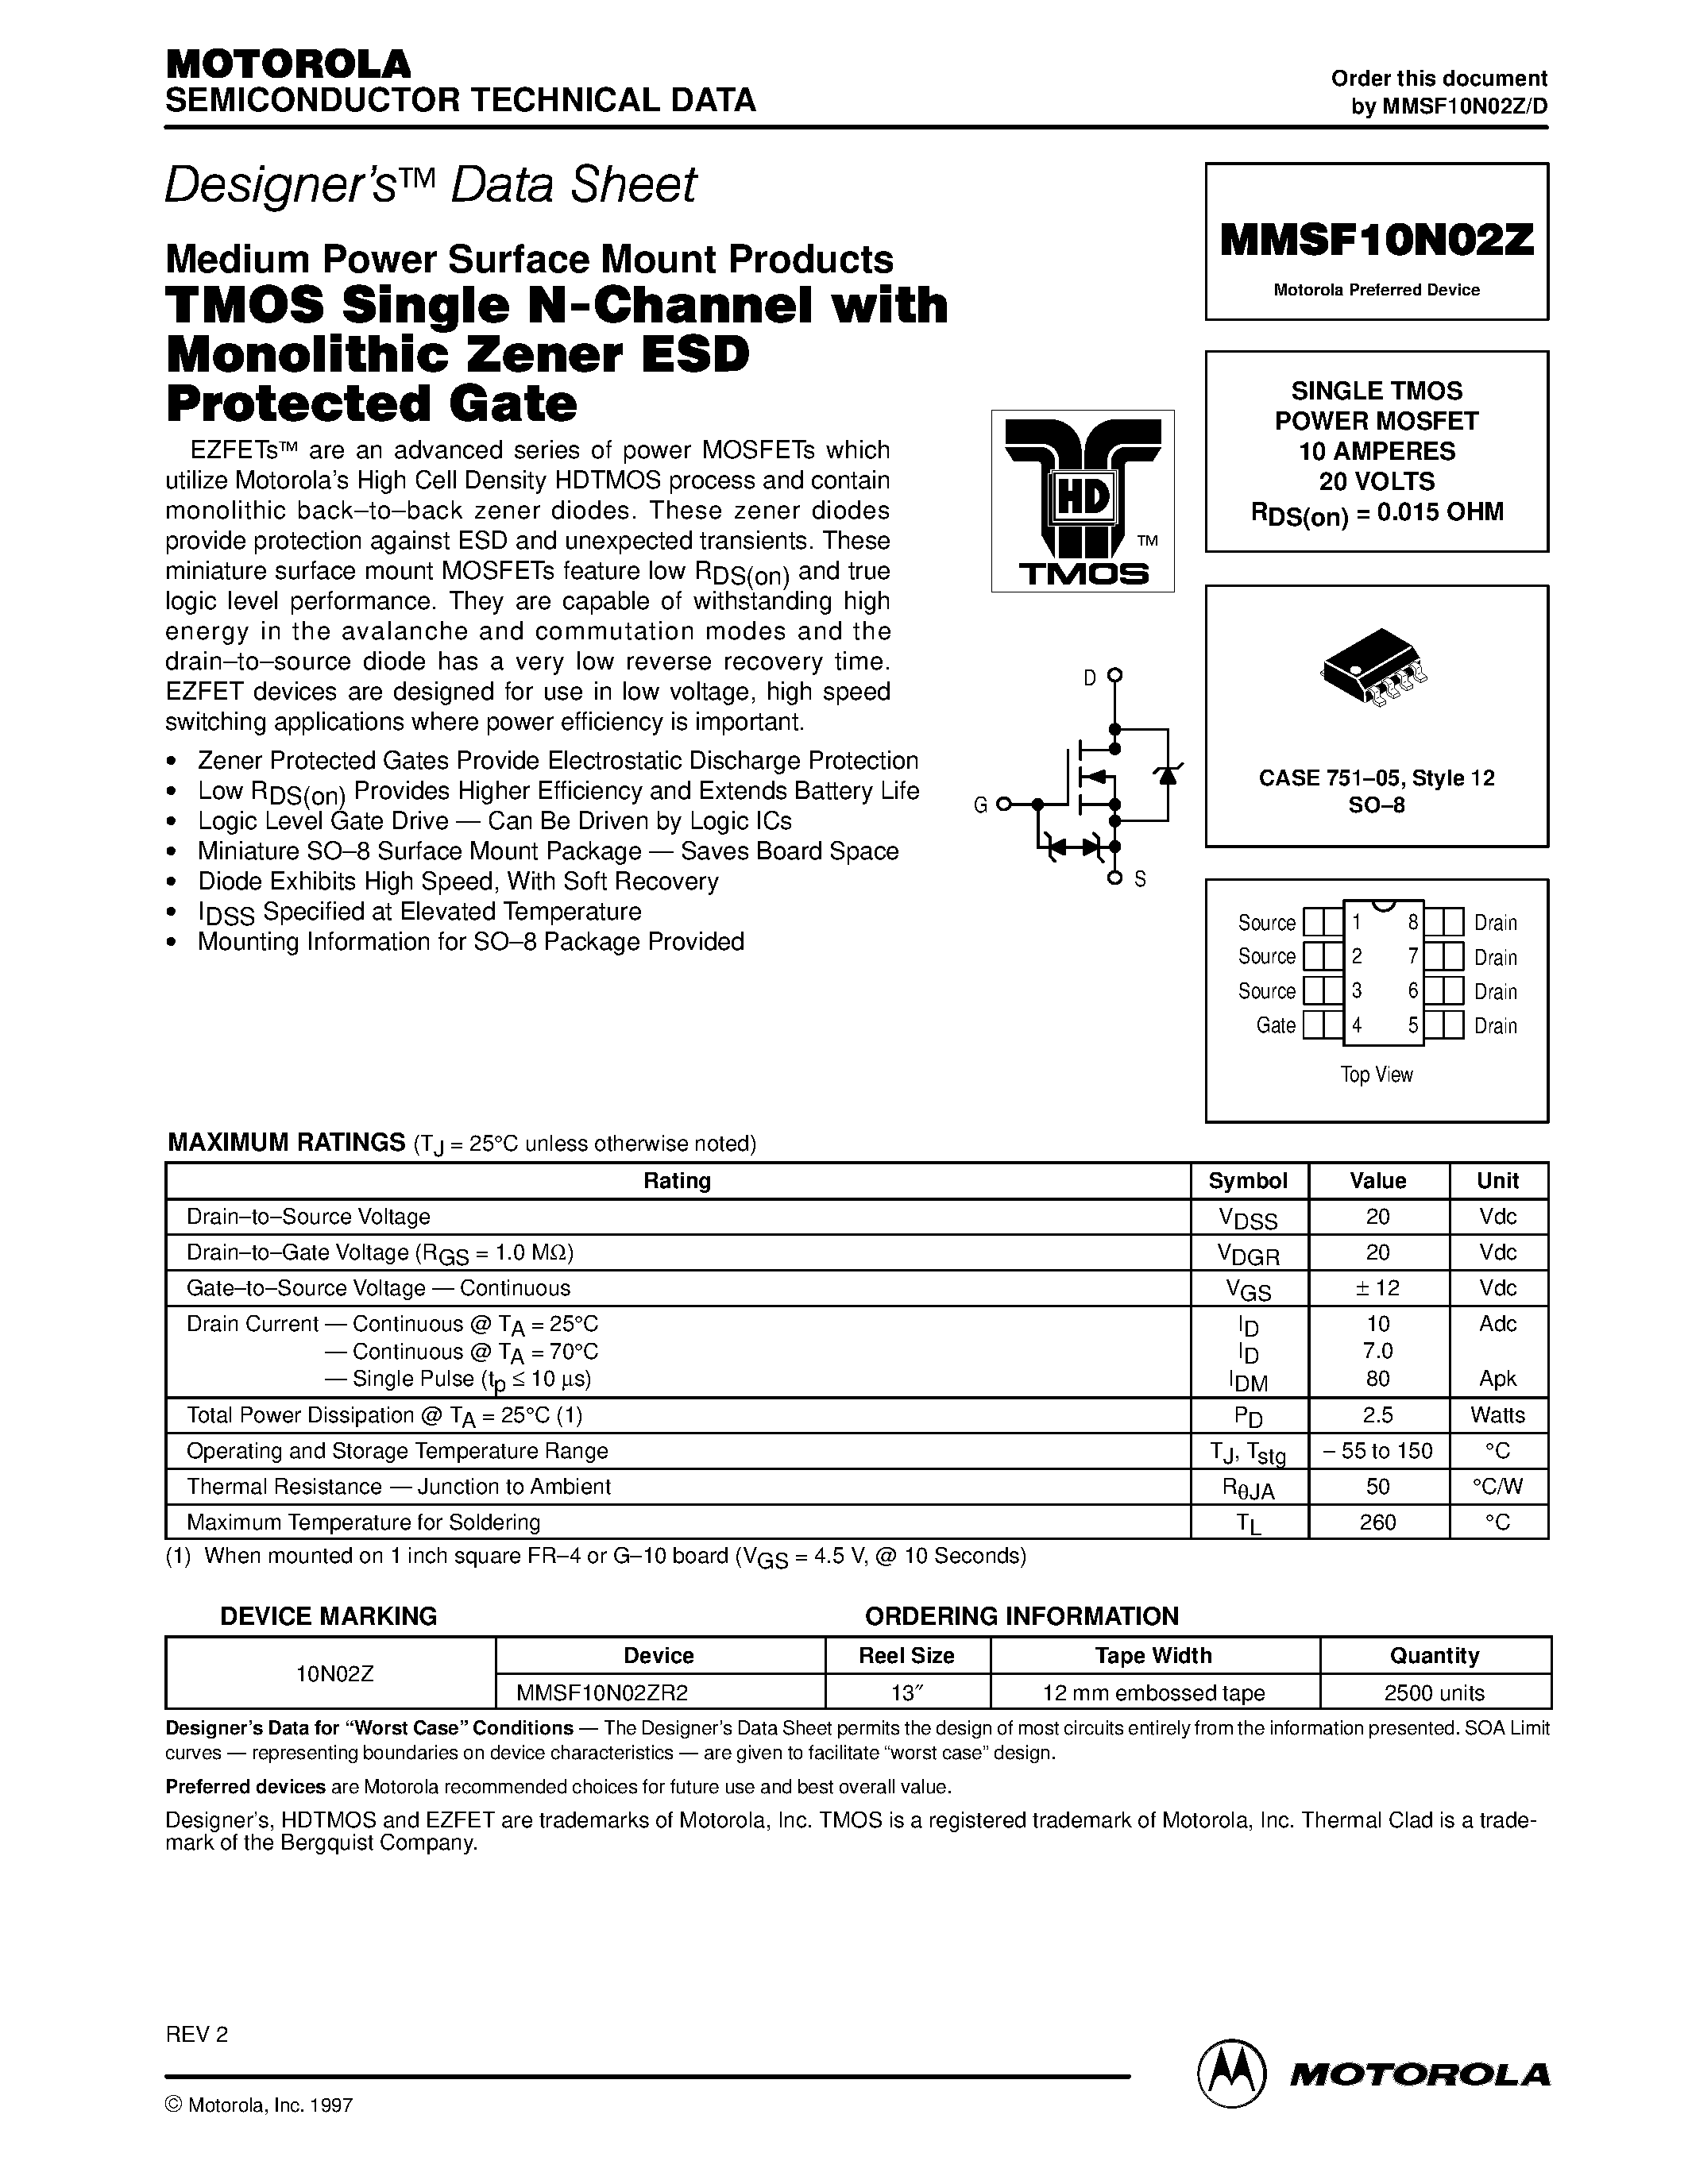 Datasheet MMSF10N02Z - SINGLE TMOS POWER MOSFET 10 AMPERES 20 VOLTS page 1